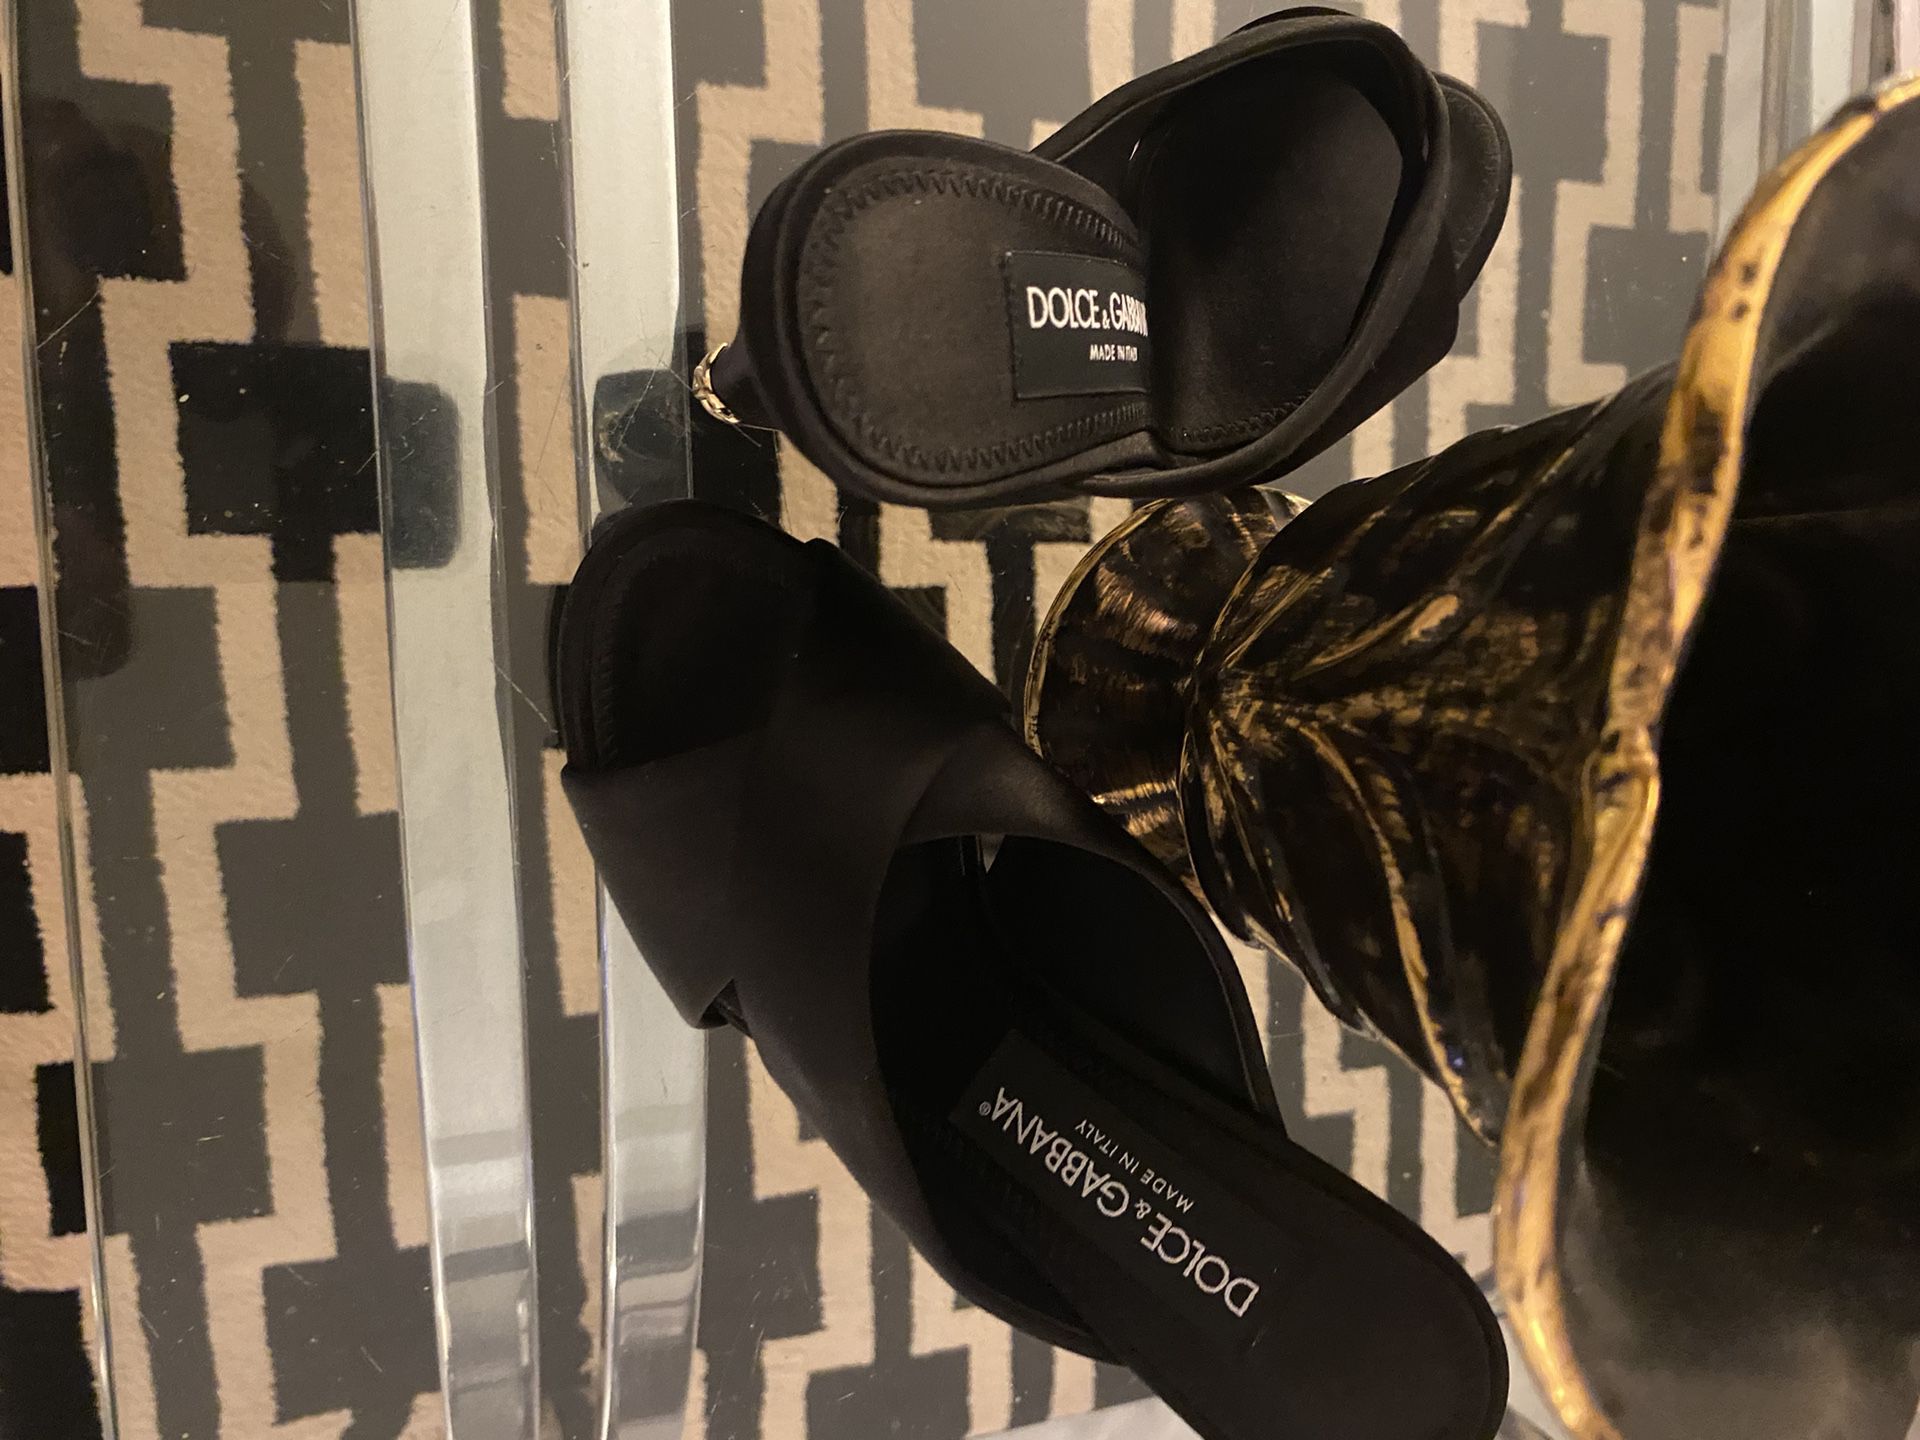 Dolce Gabbana Satan sandals with heels